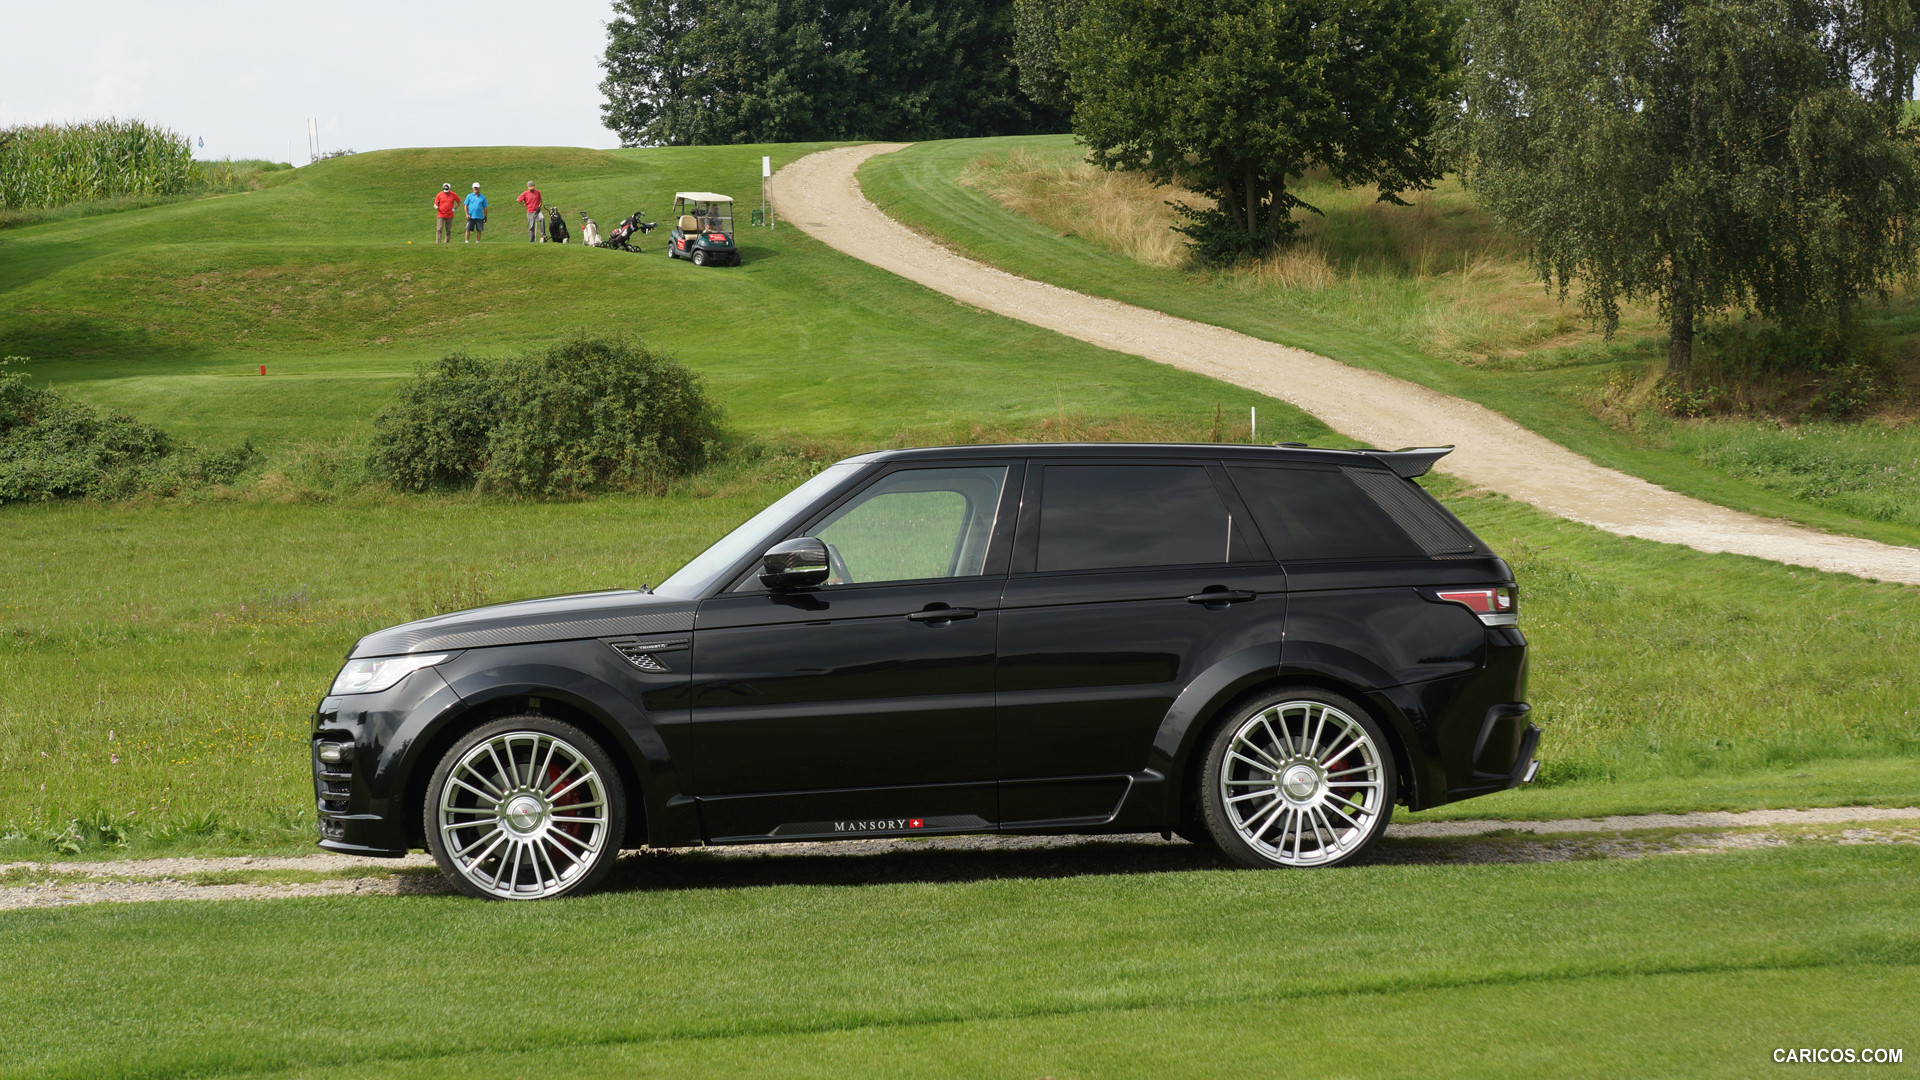 2015 Mansory Range Rover Sport (Black) - Side, #10 of 19